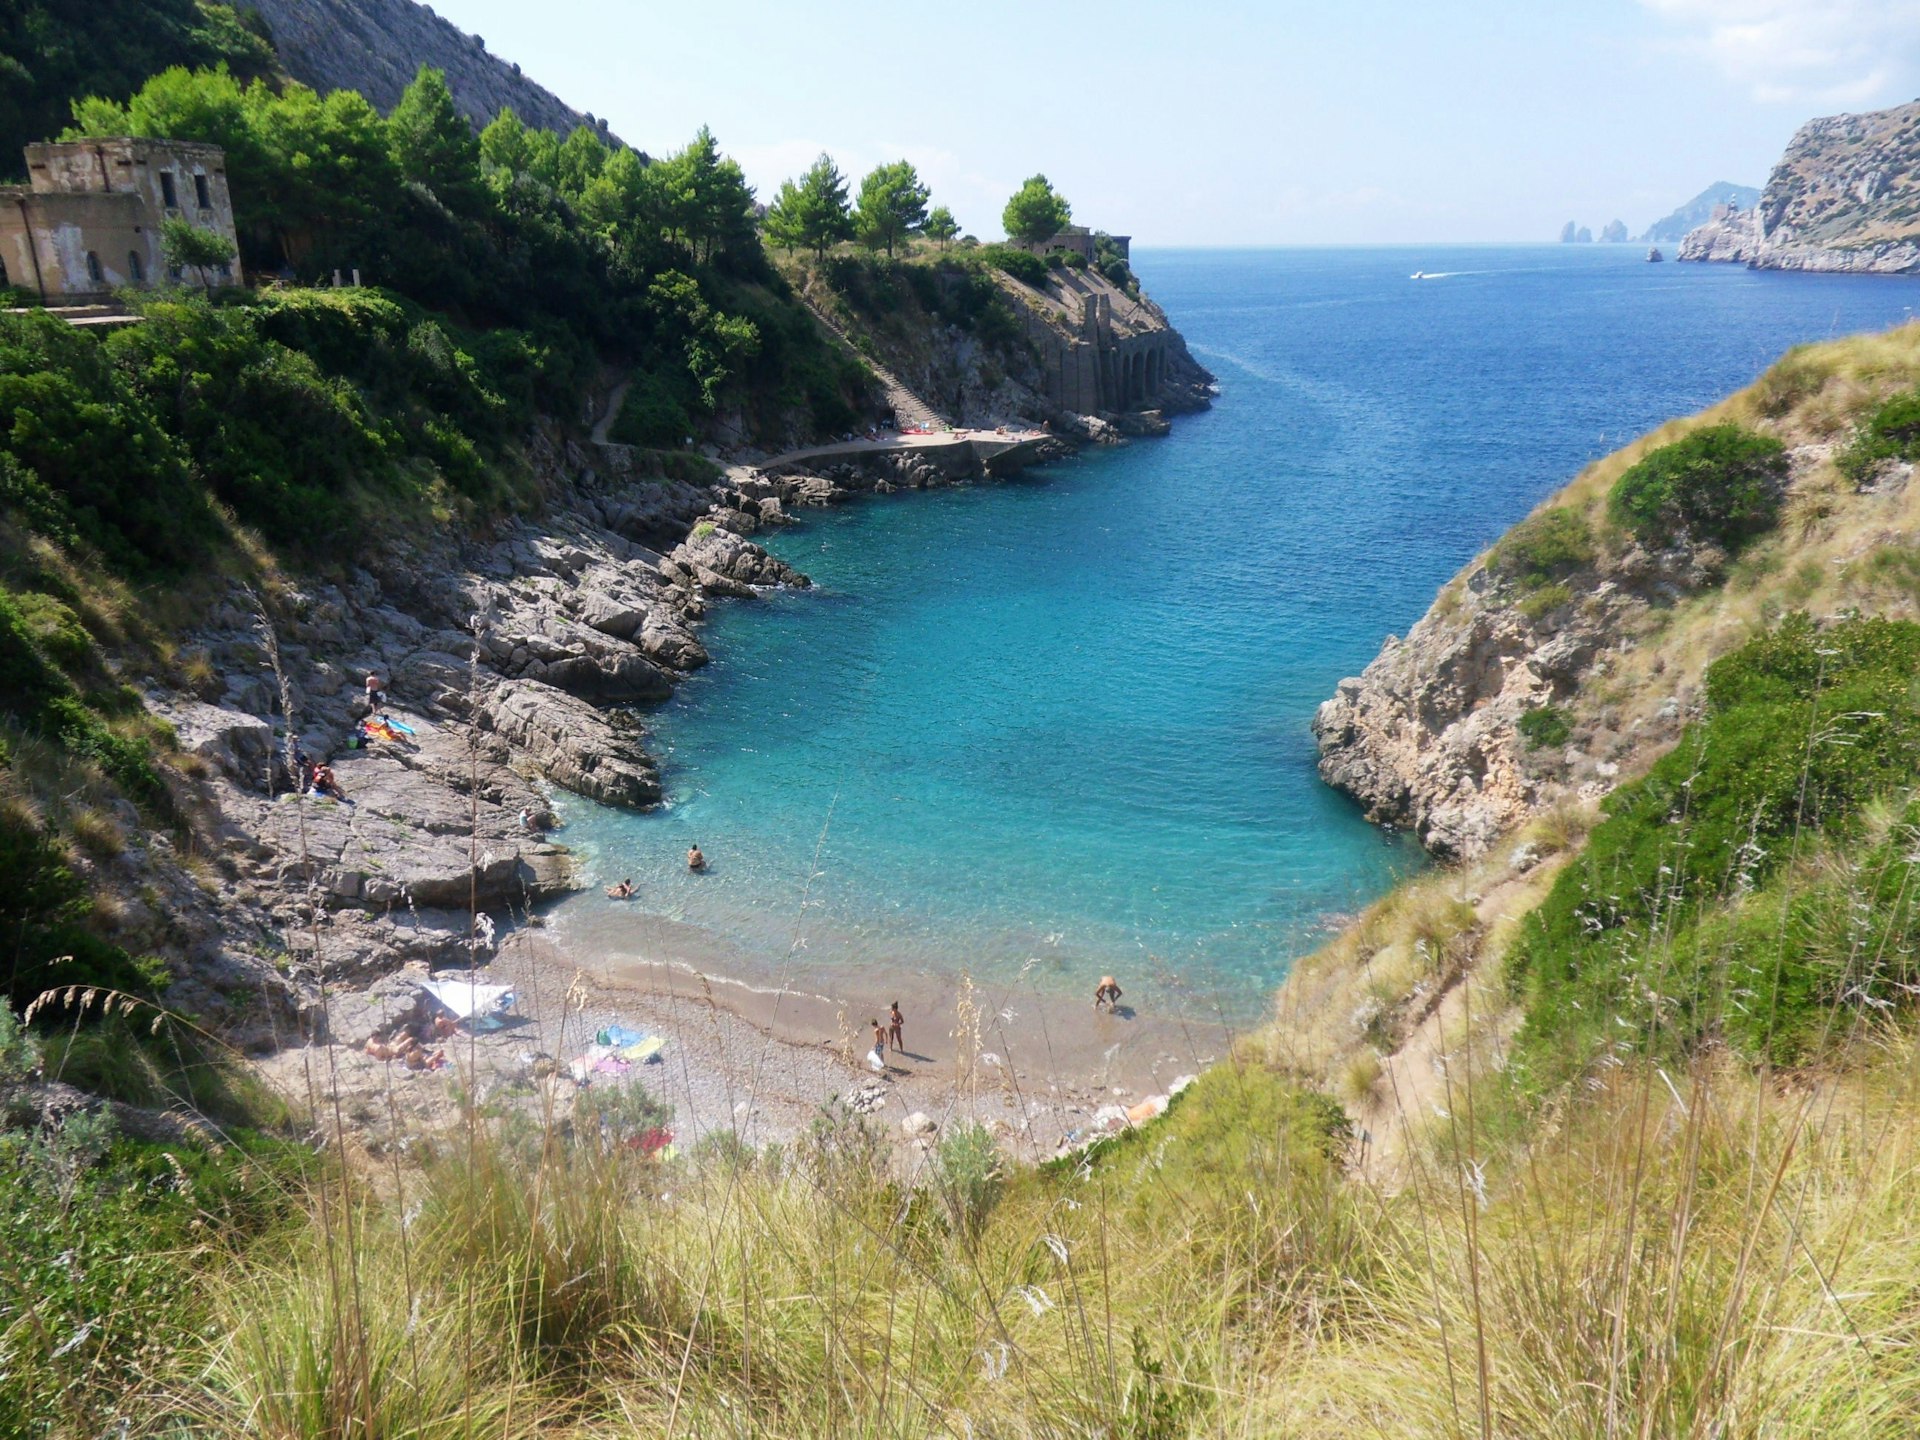 A view of Baia di Ieranto beach, Massa Lubrense, Sorrento Peninsula, Campania, Italy